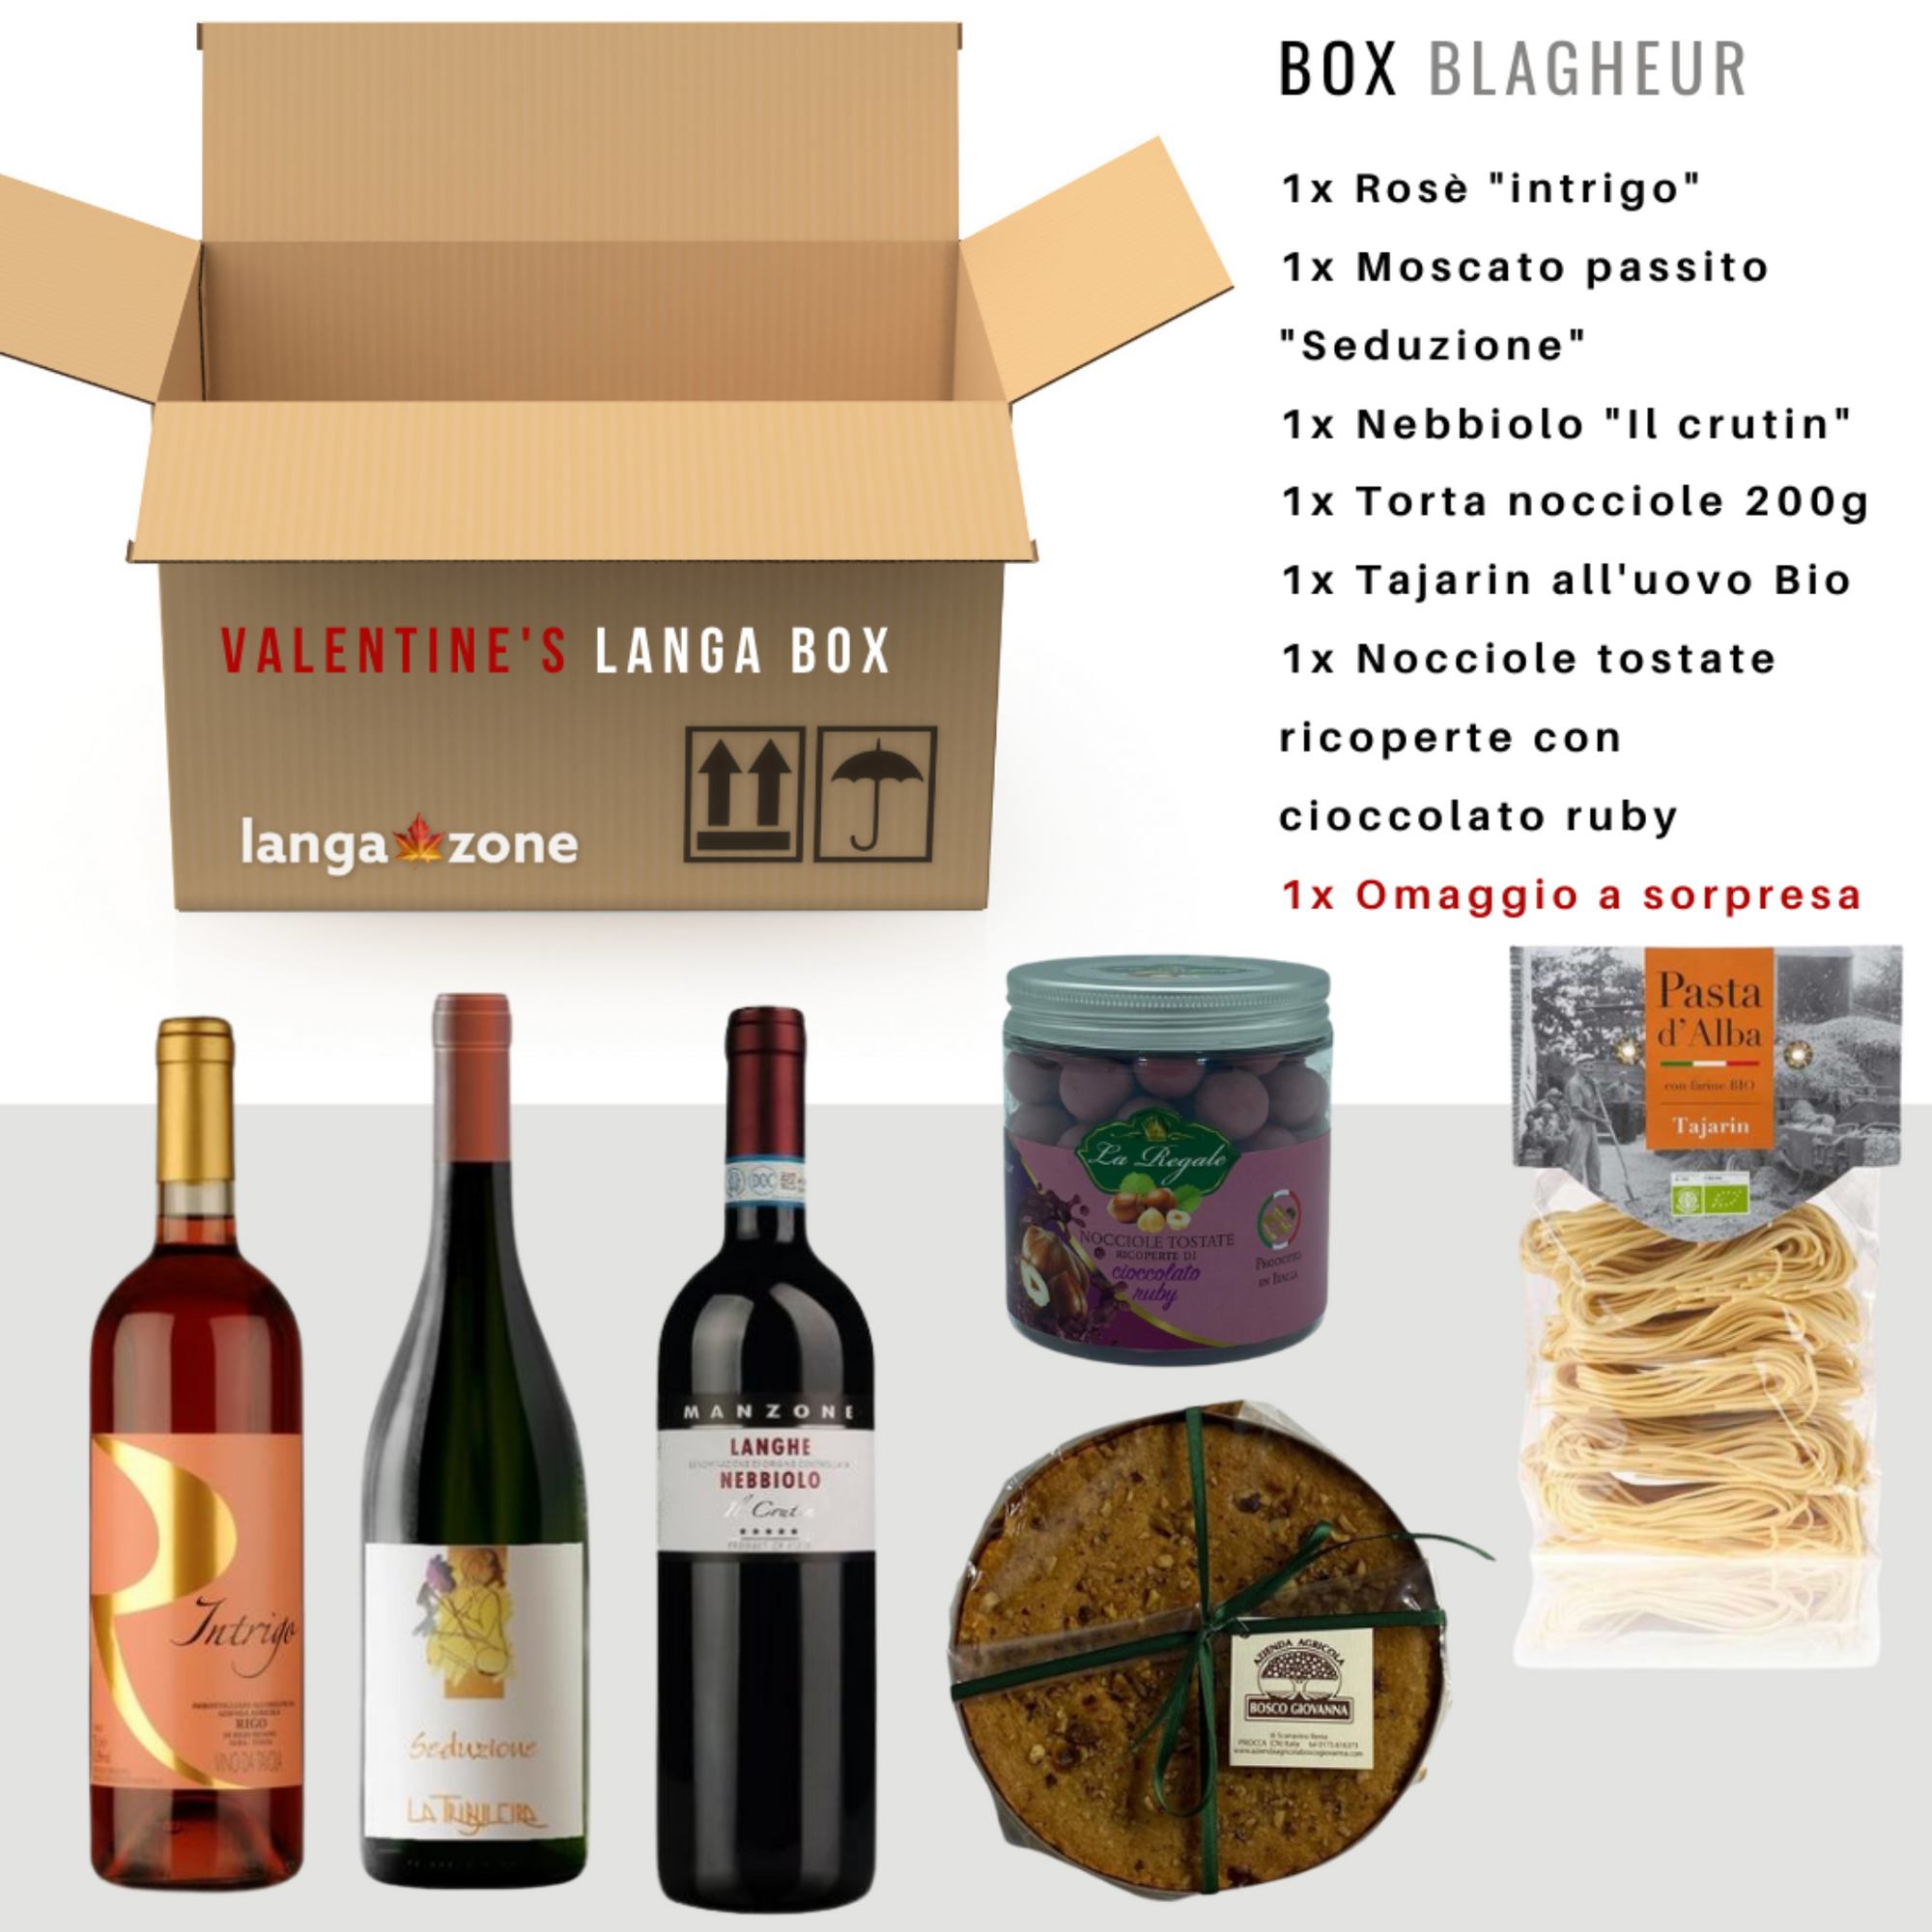 Valentine's Langa Box Blagheur